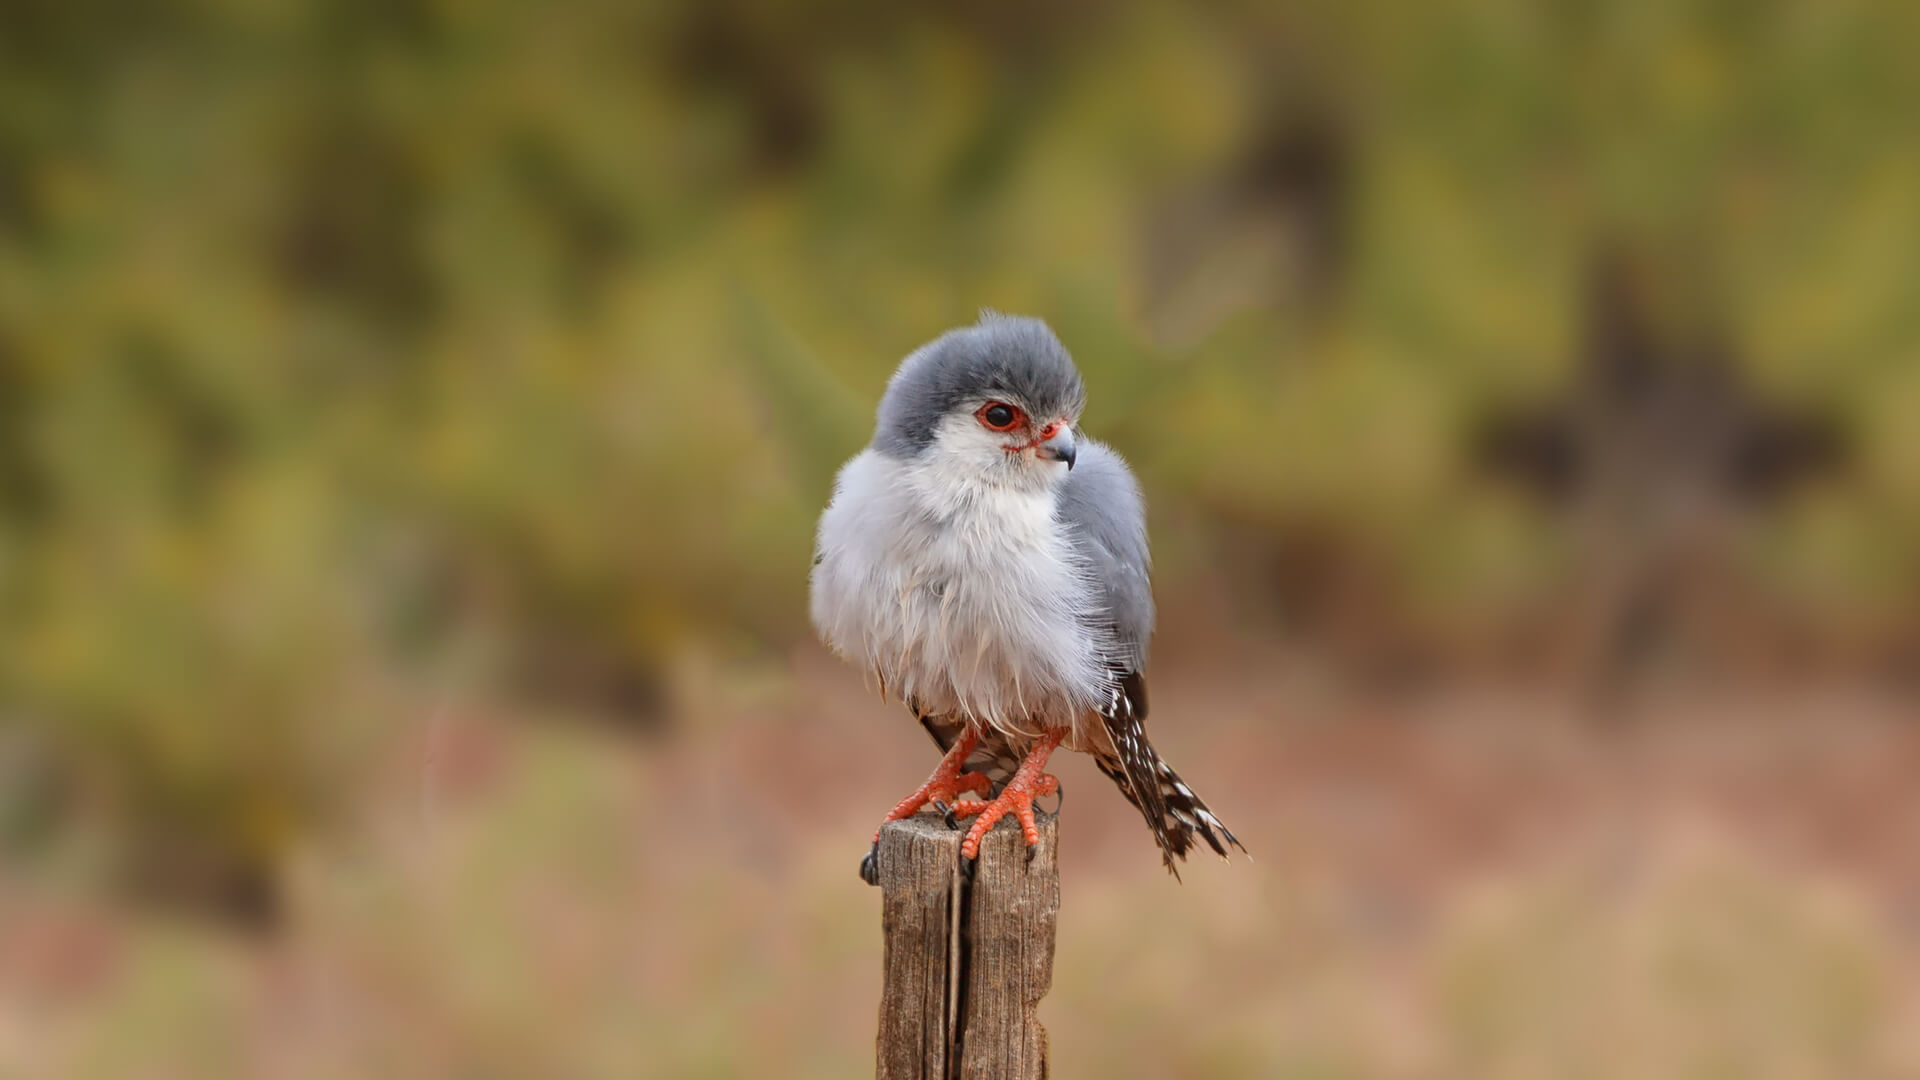 Pygmy falcon perched on a wood pole.